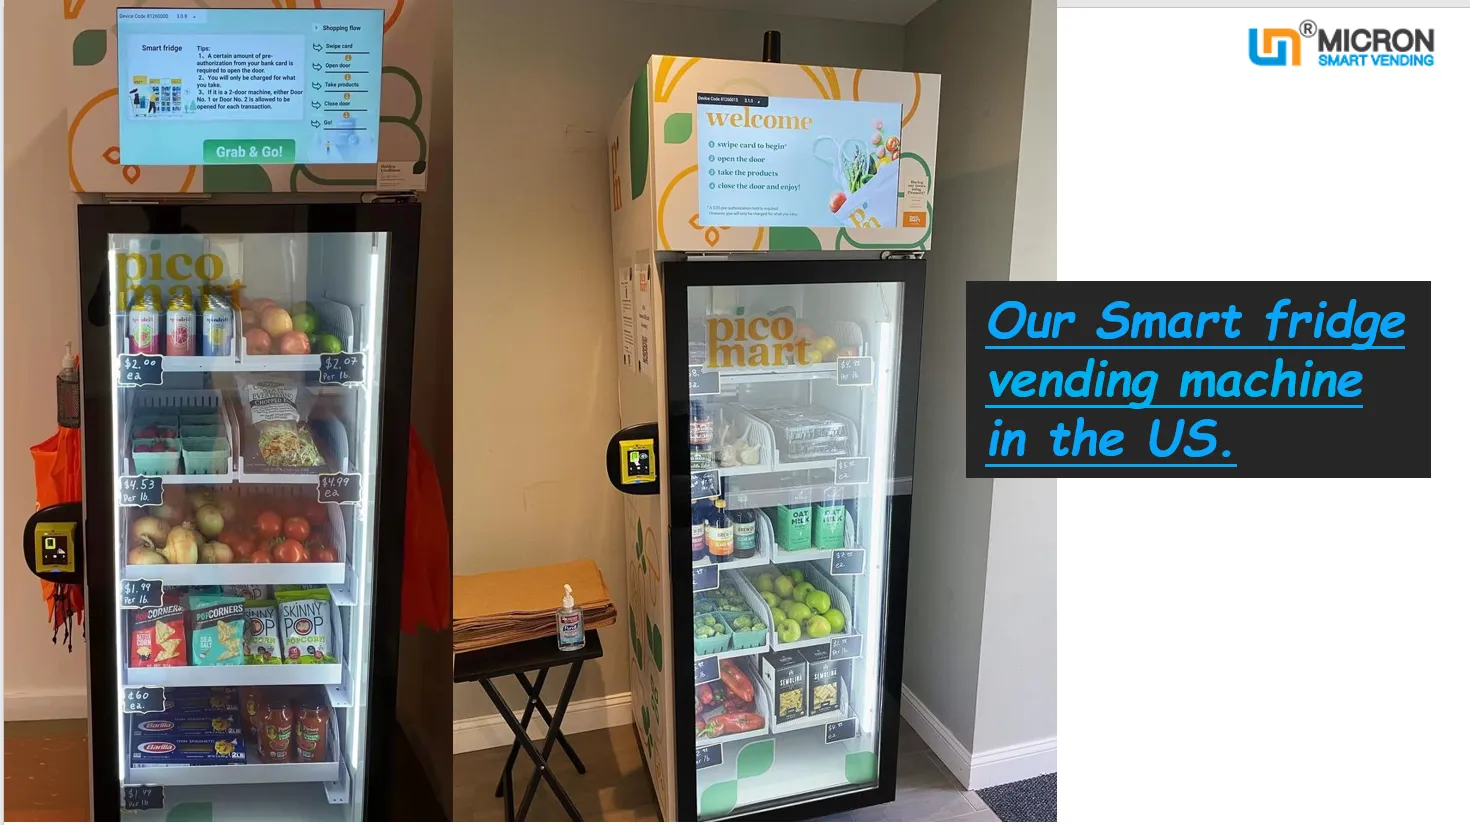 pre-made meals vending machine fresh food vending machine in the USA